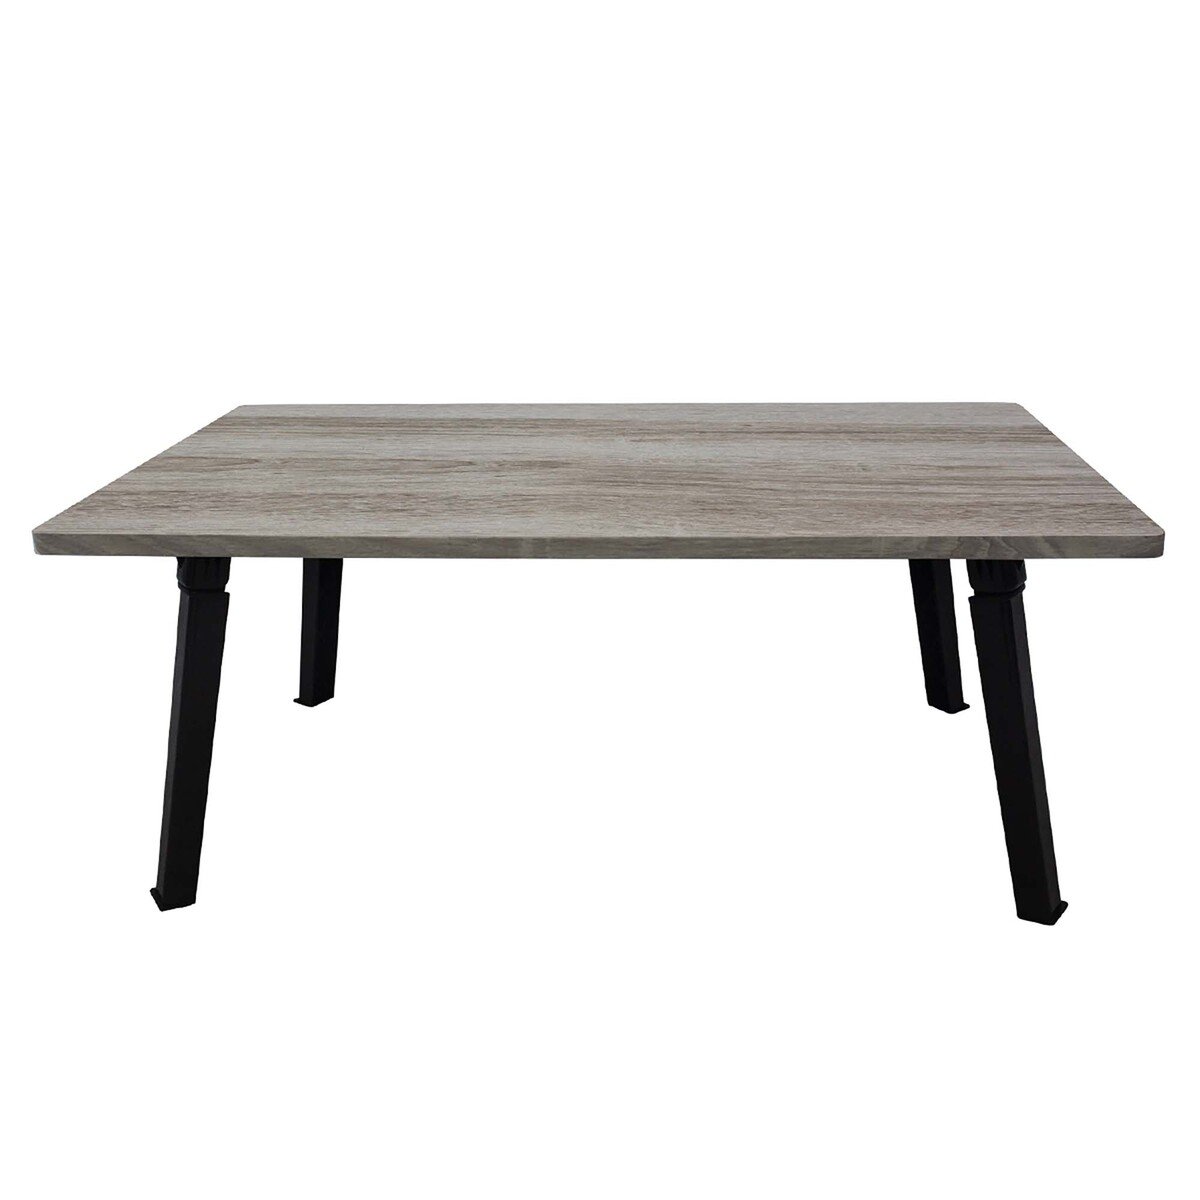 Maple Leaf Multi Purpose Folding Table W40xL60xH28.5cm JT01 Beige